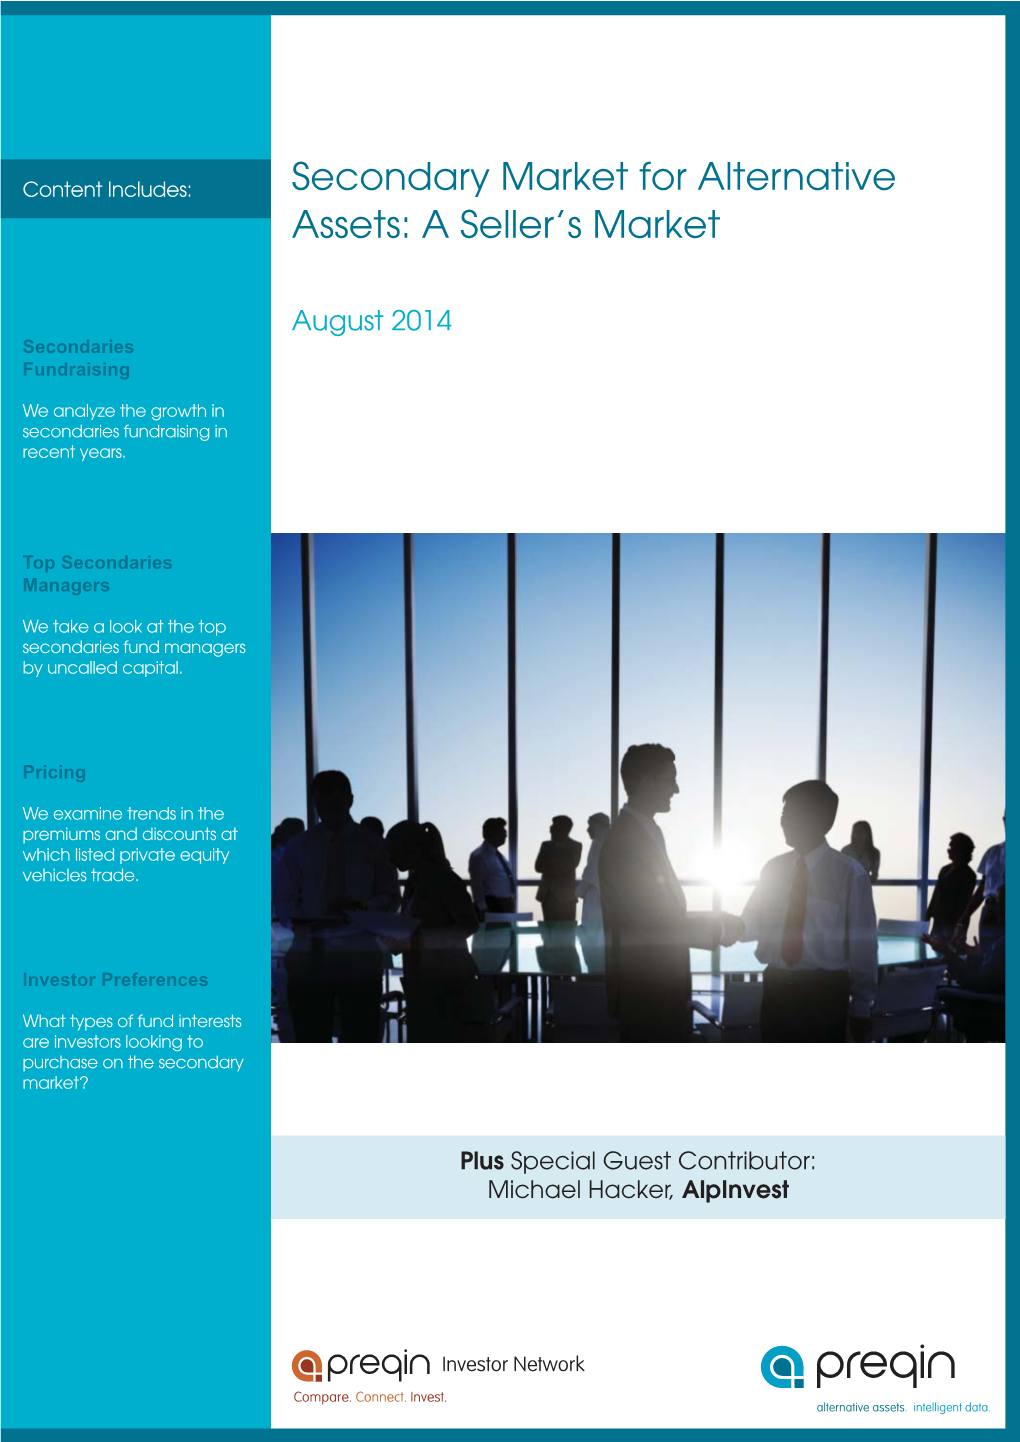 Secondary Market for Alternative Assets: a Seller's Market